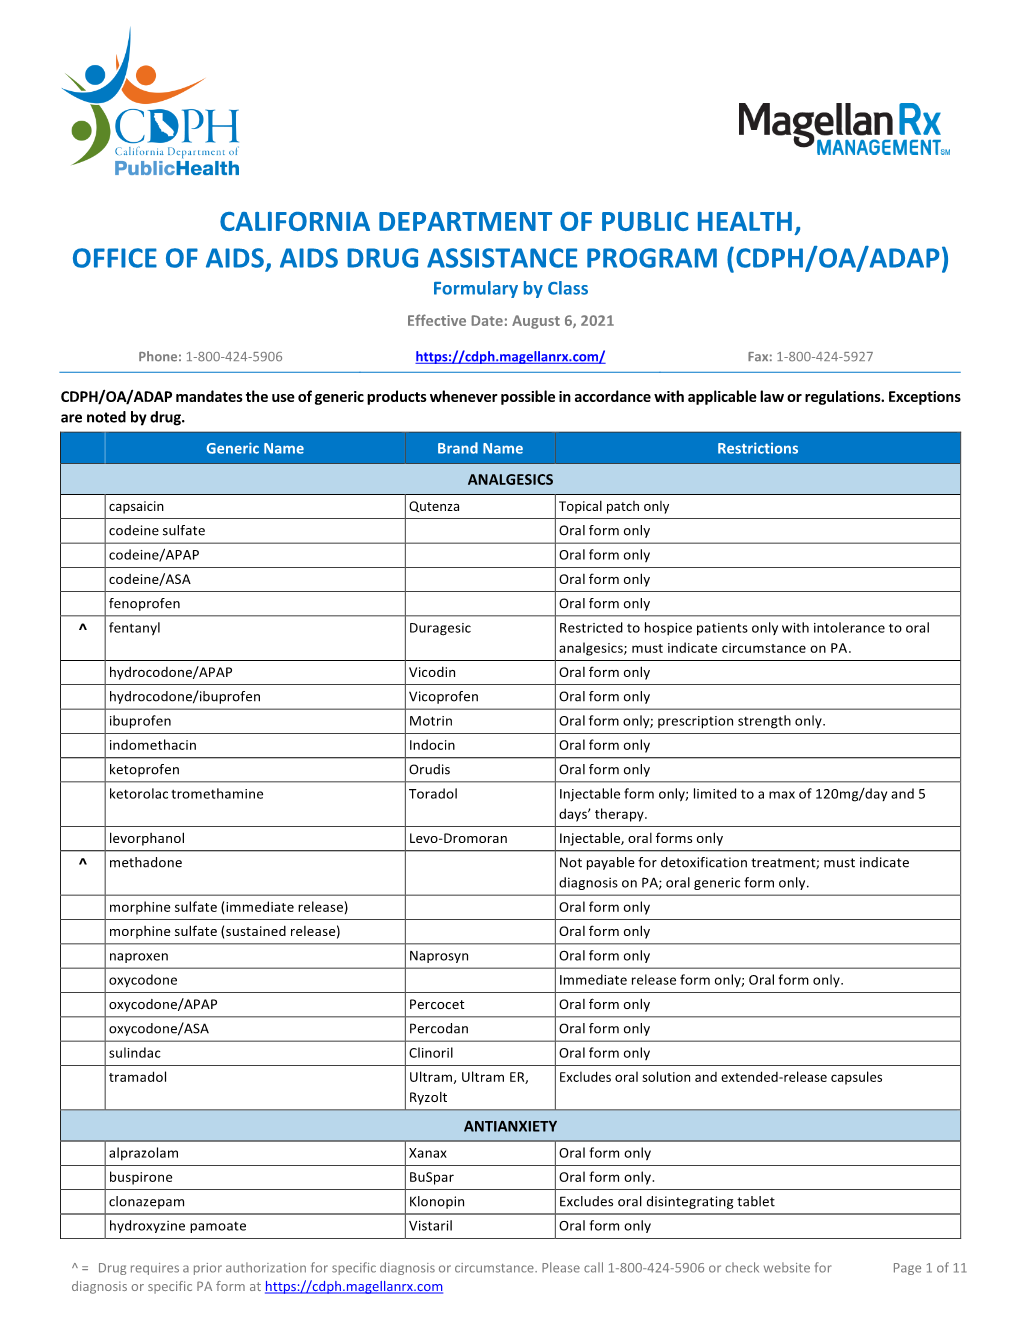 California Department of Public Health ADAP Formulary